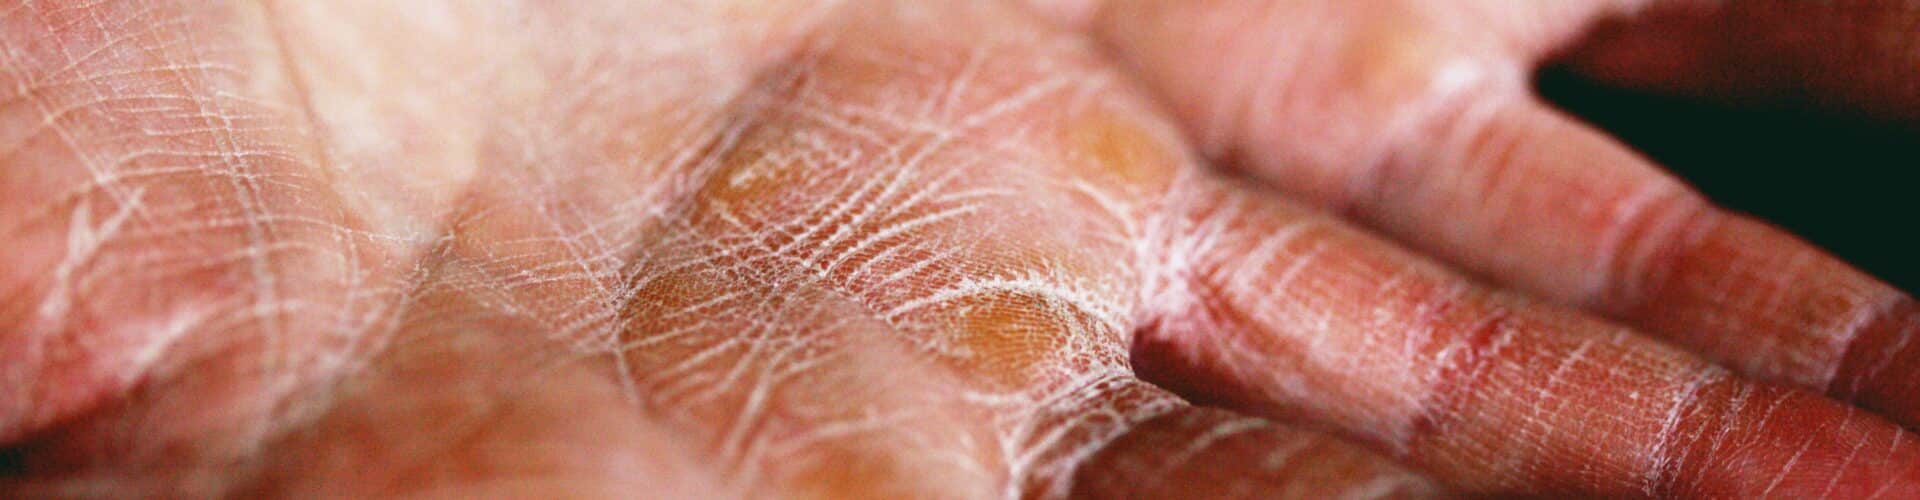 Eczema on Hands